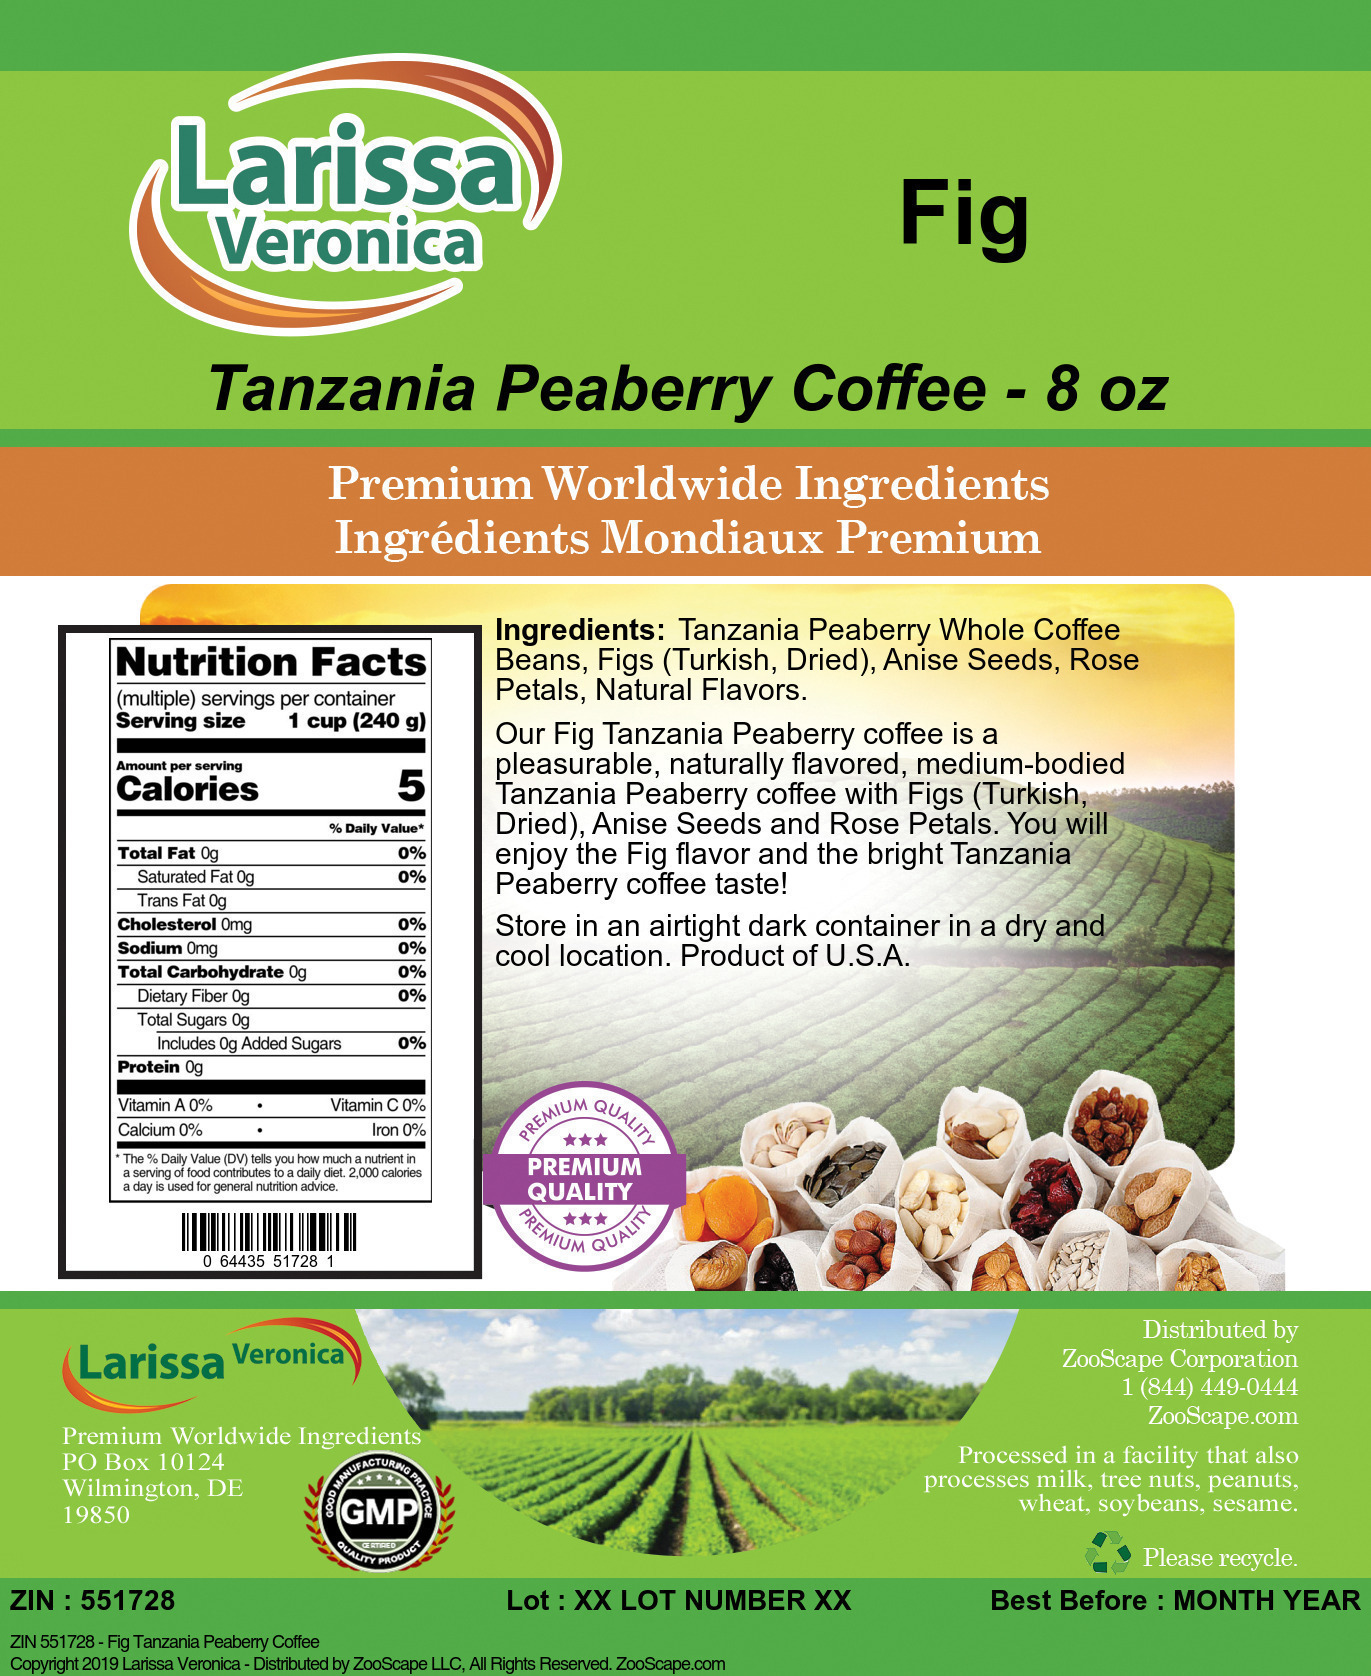 Fig Tanzania Peaberry Coffee - Label